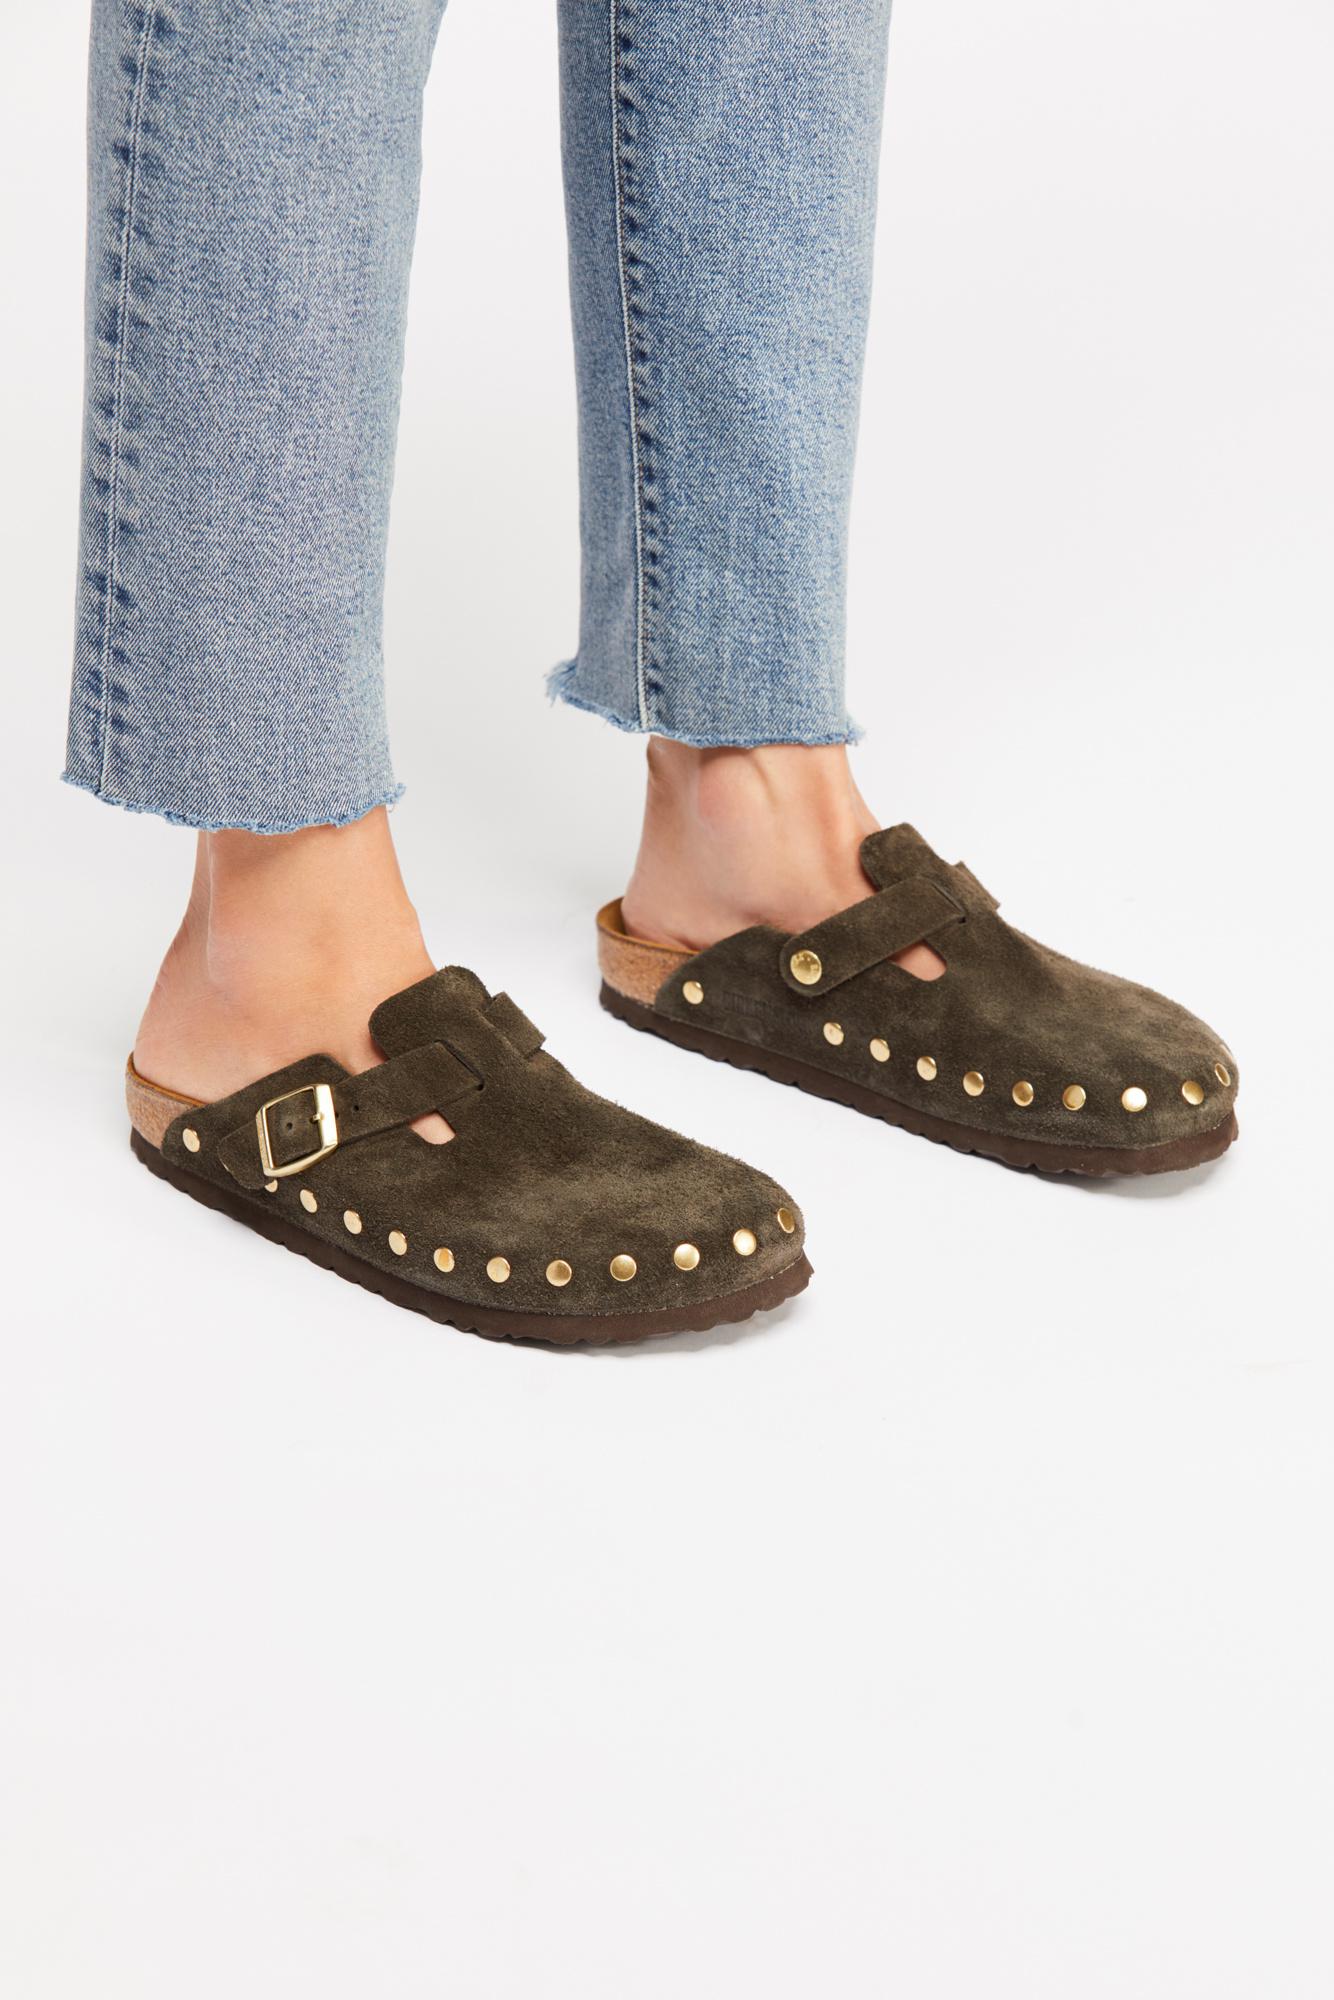 croc shoe charms amazon